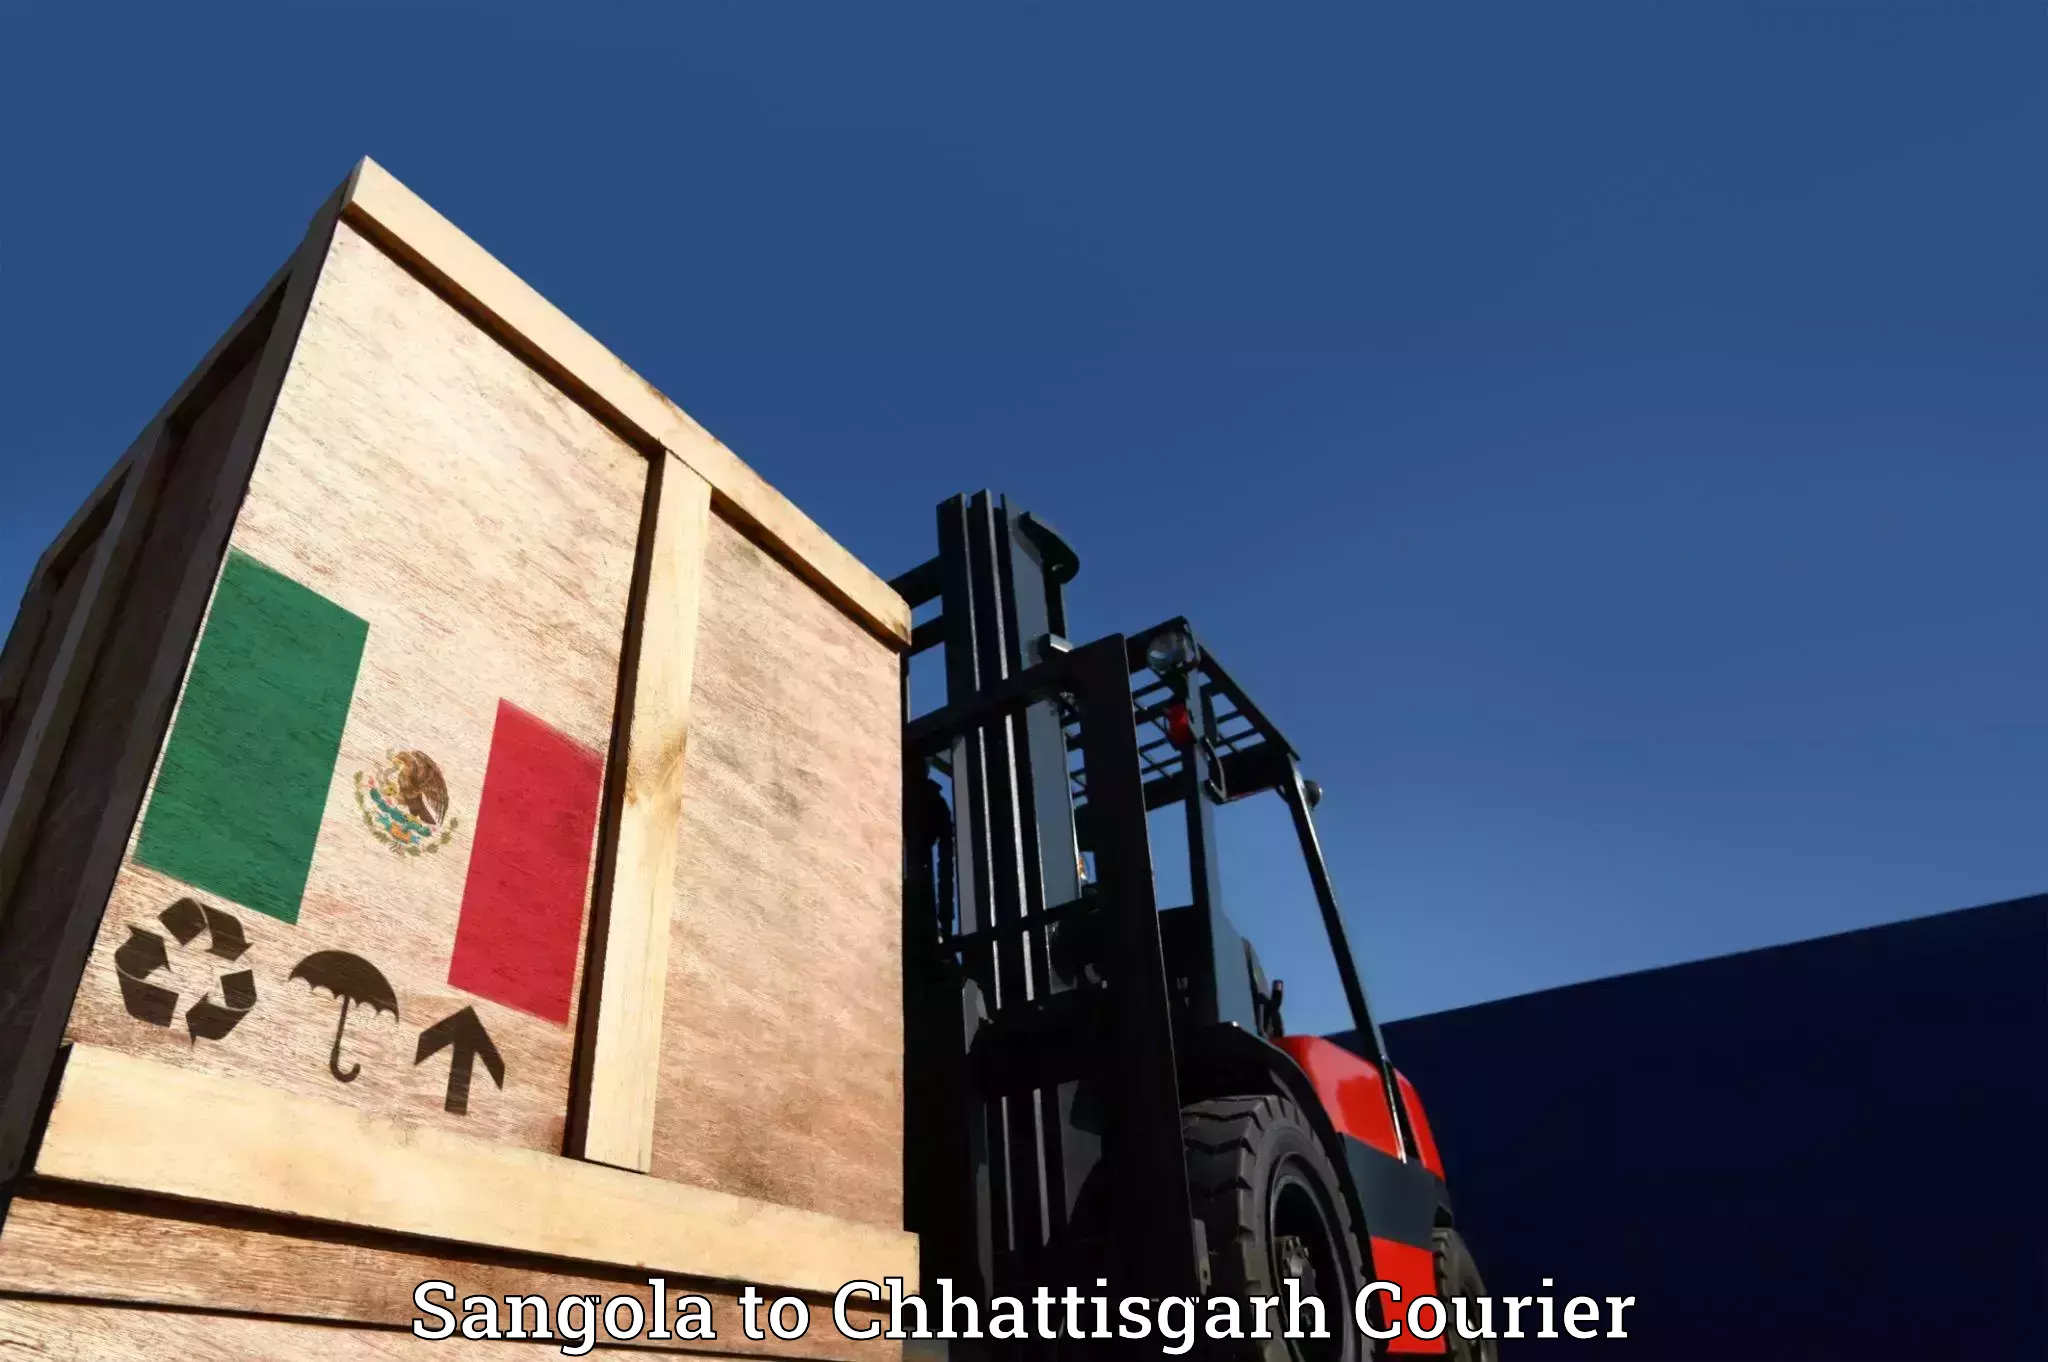 Home relocation and storage Sangola to Korea Chhattisgarh